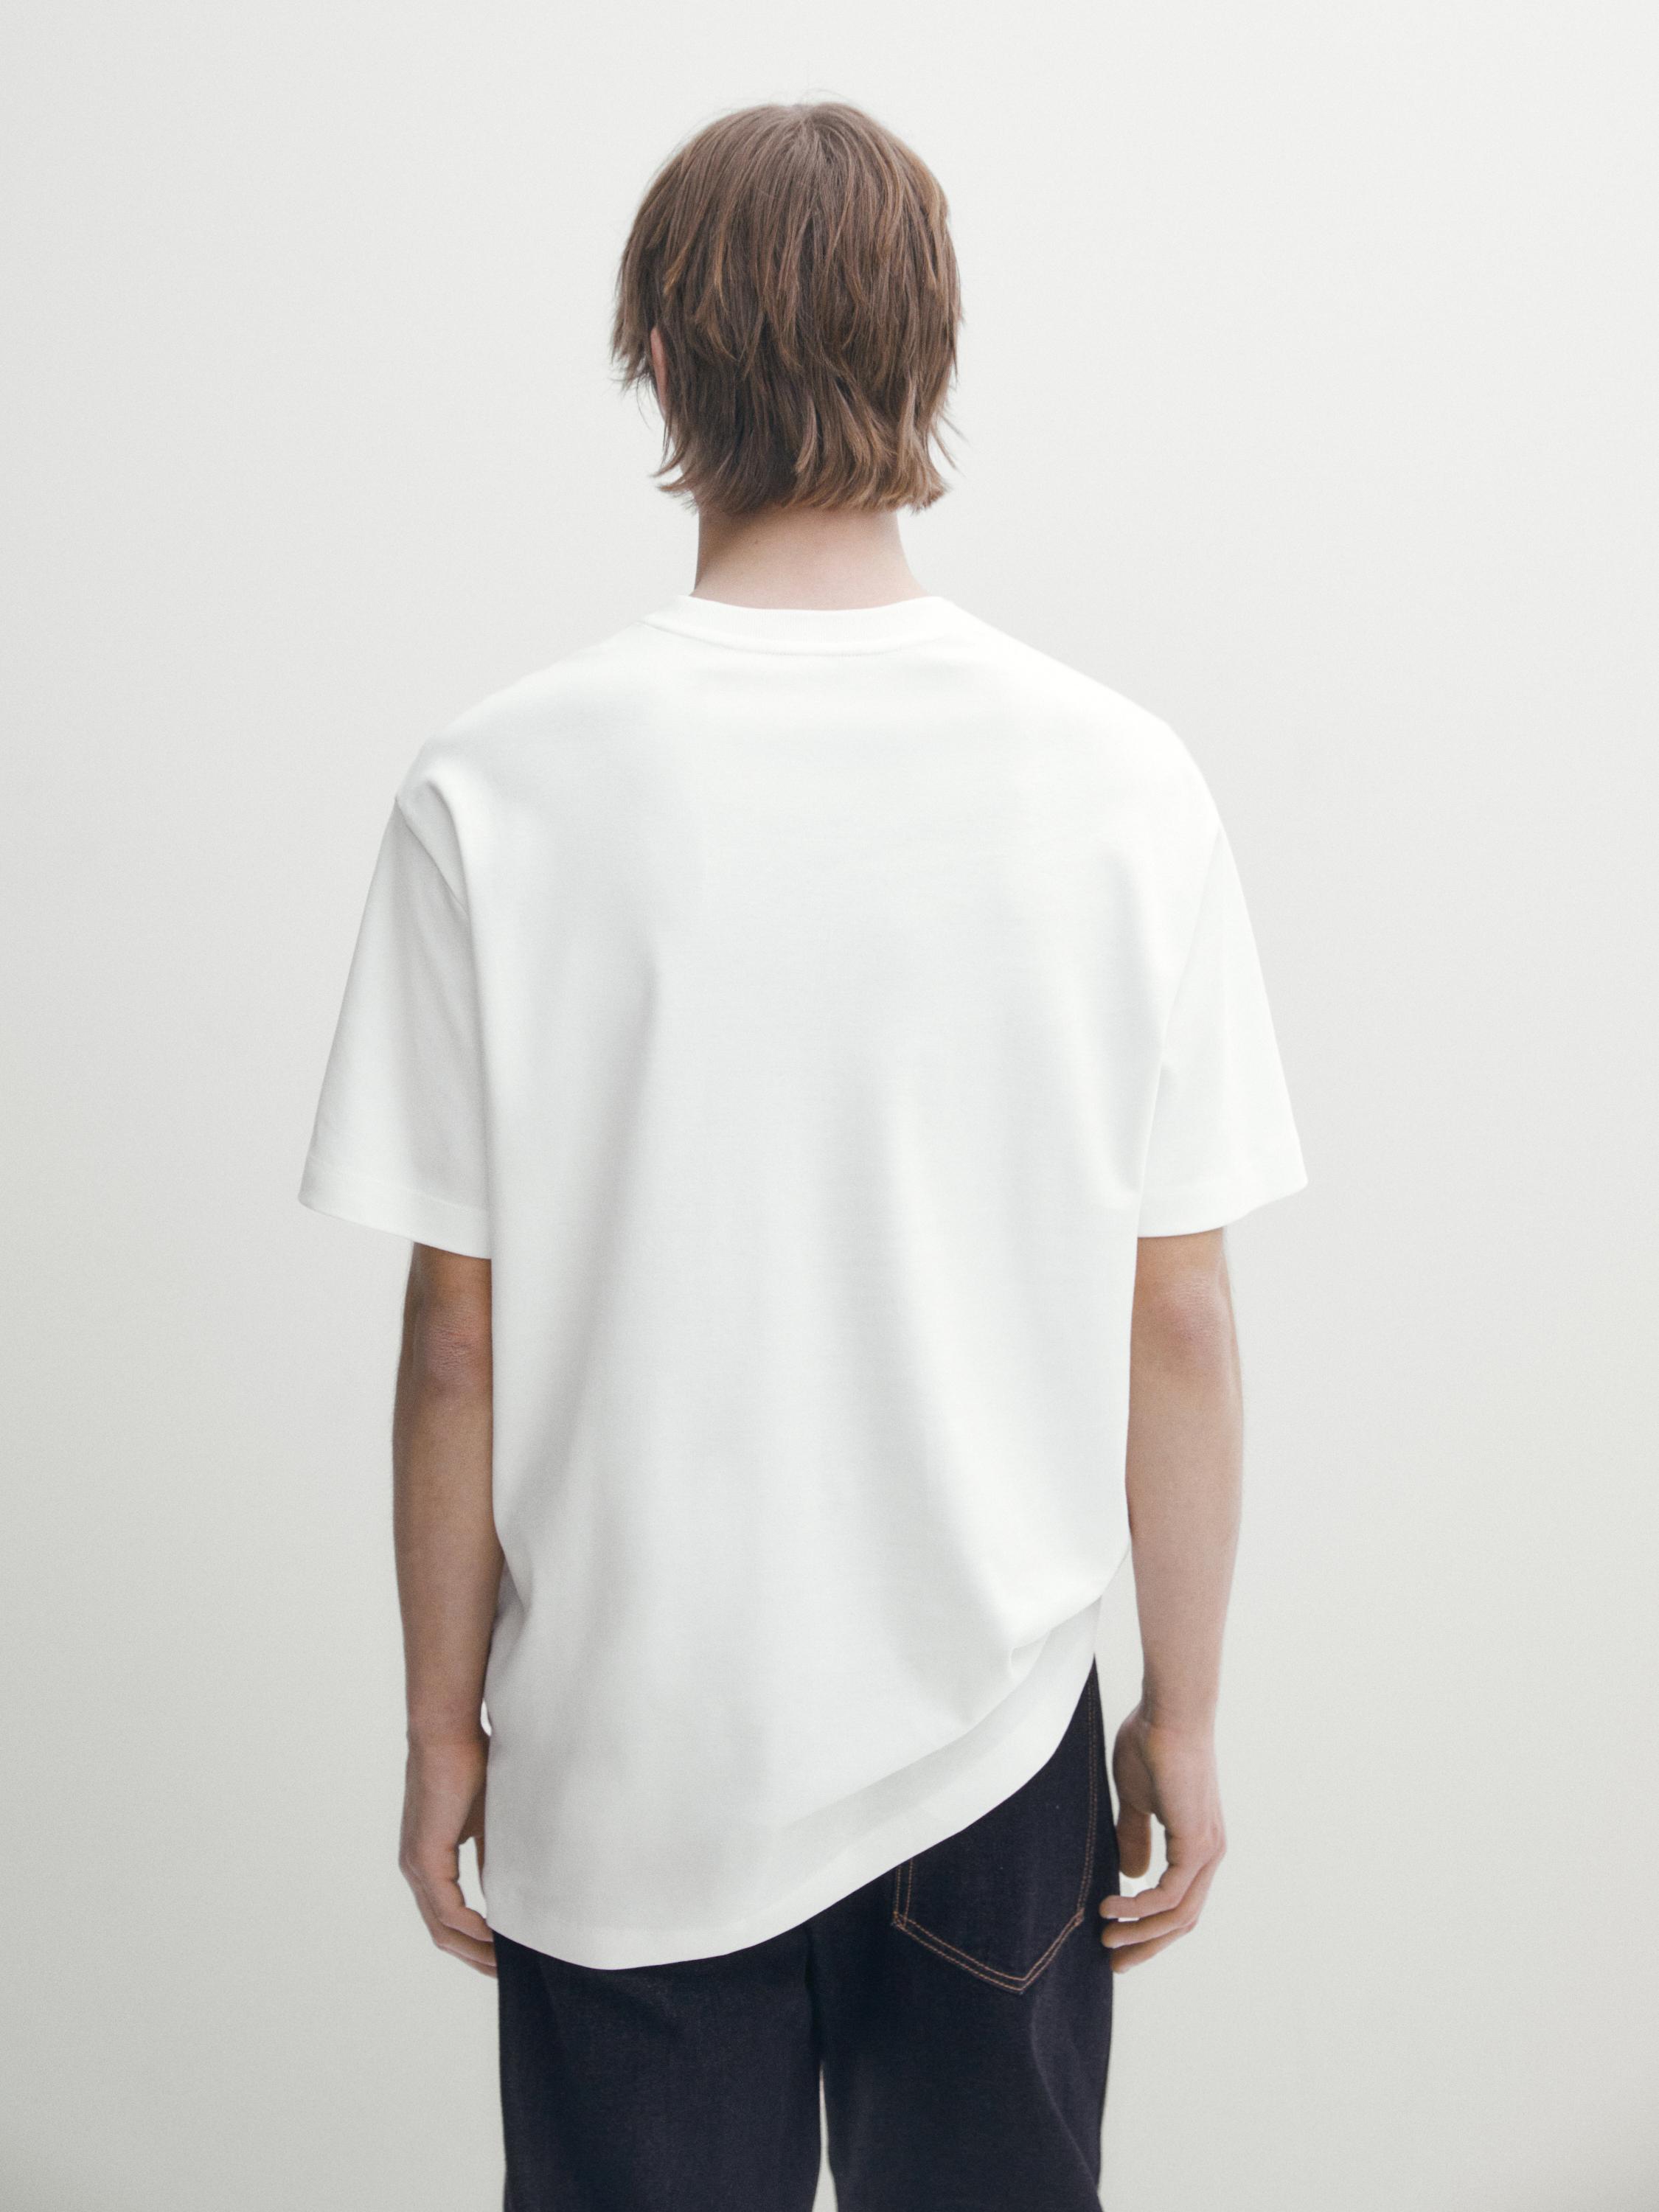 100% cotton medium weight T-shirt - Gray green | ZARA Canada